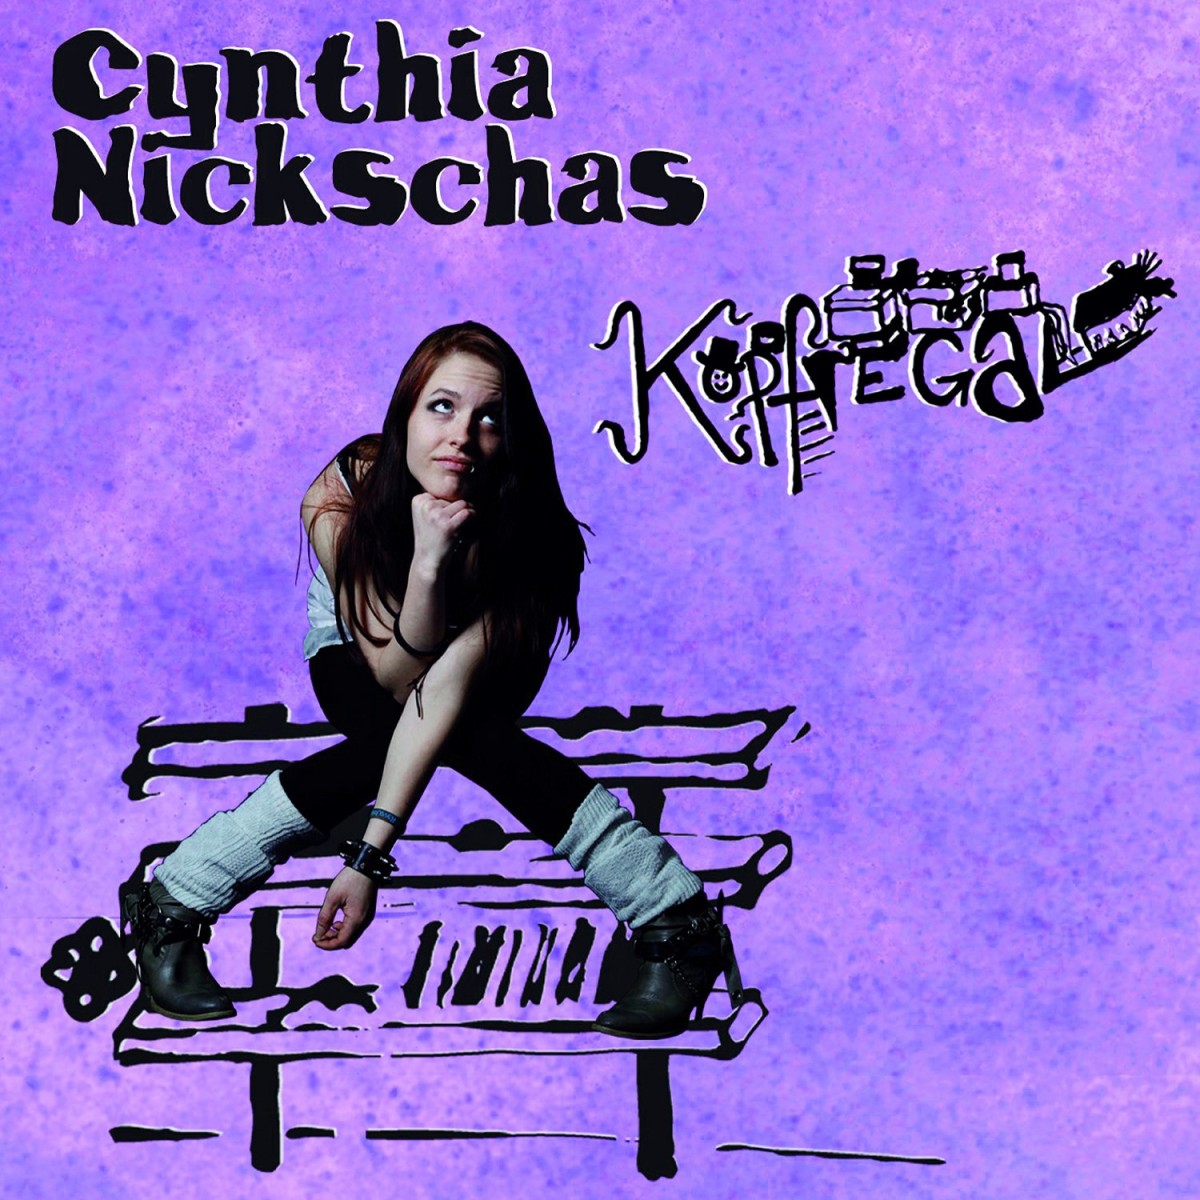 Nickschas, Cynthia: Kopfregal (2014)